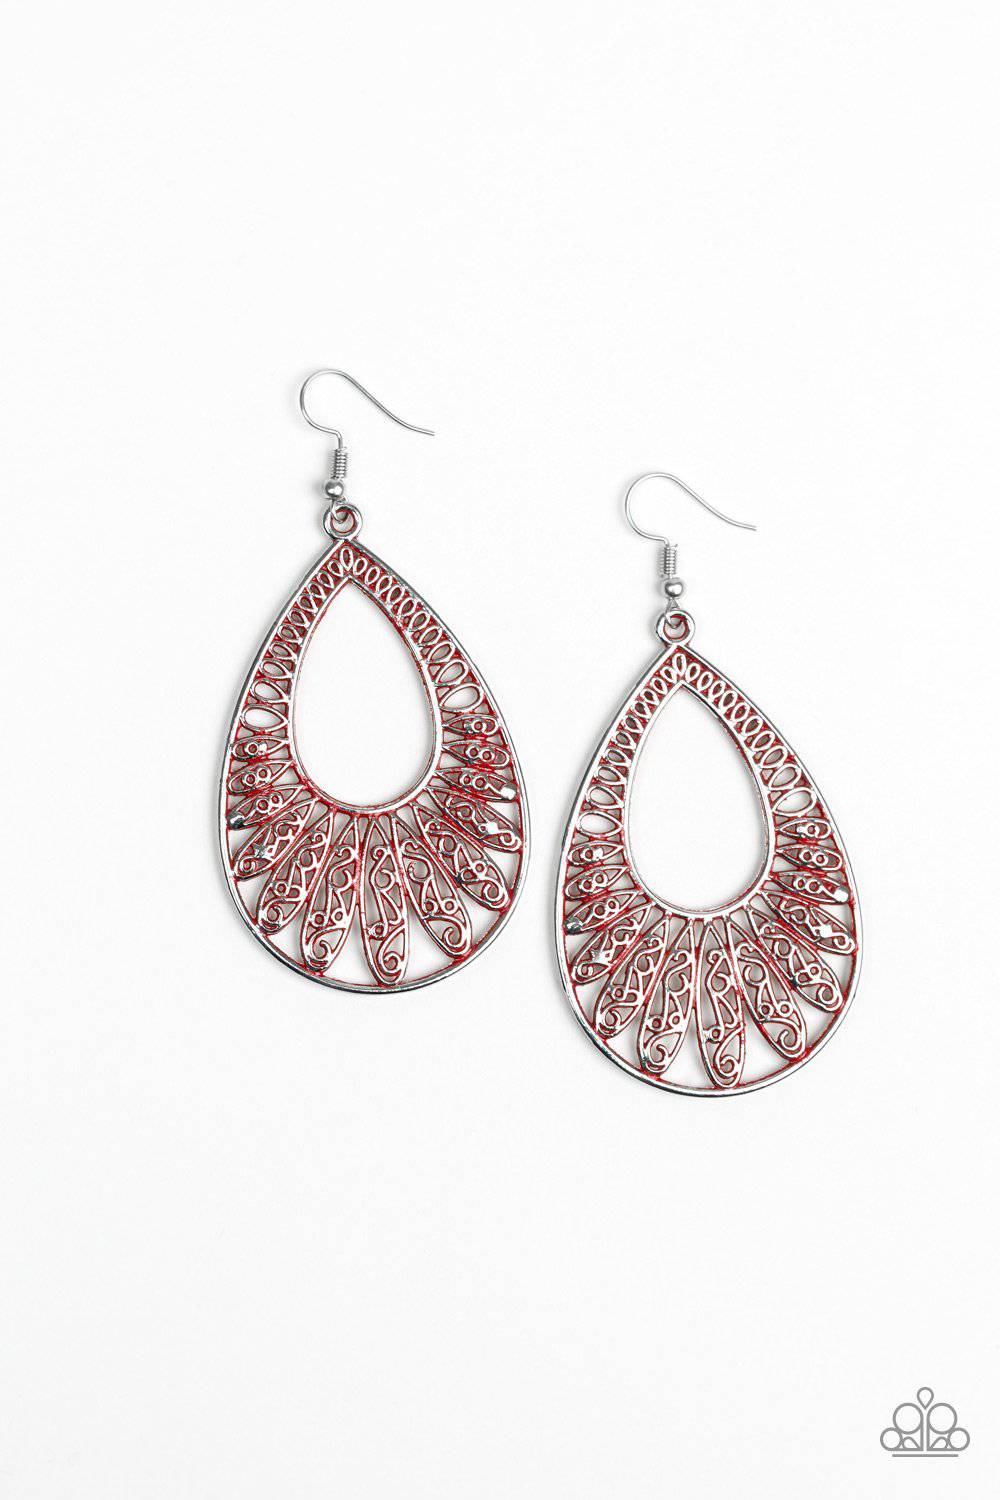 Flamingo Flamenco - Red Teardrop Earrings - Paparazzi Accessories - GlaMarous Titi Jewels